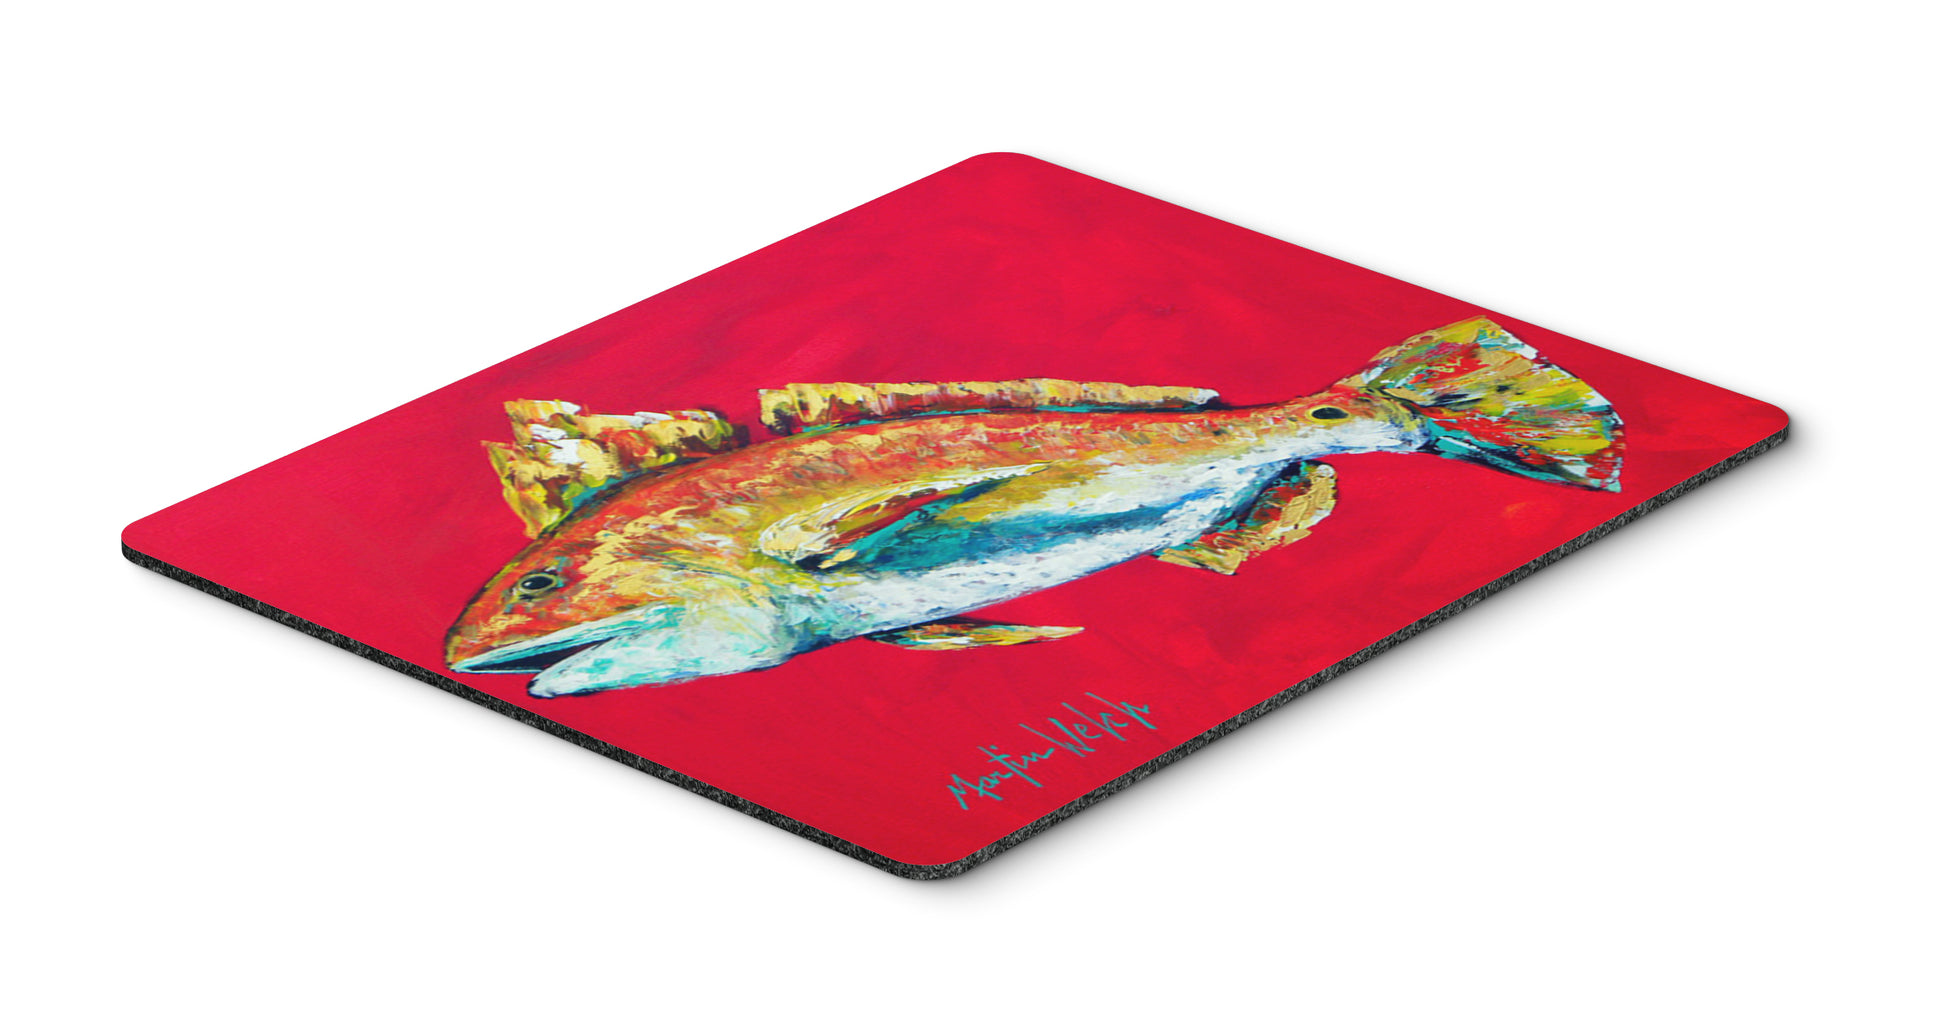 Buy this Fish - Red Fish Woo Hoo Mouse Pad, Hot Pad or Trivet